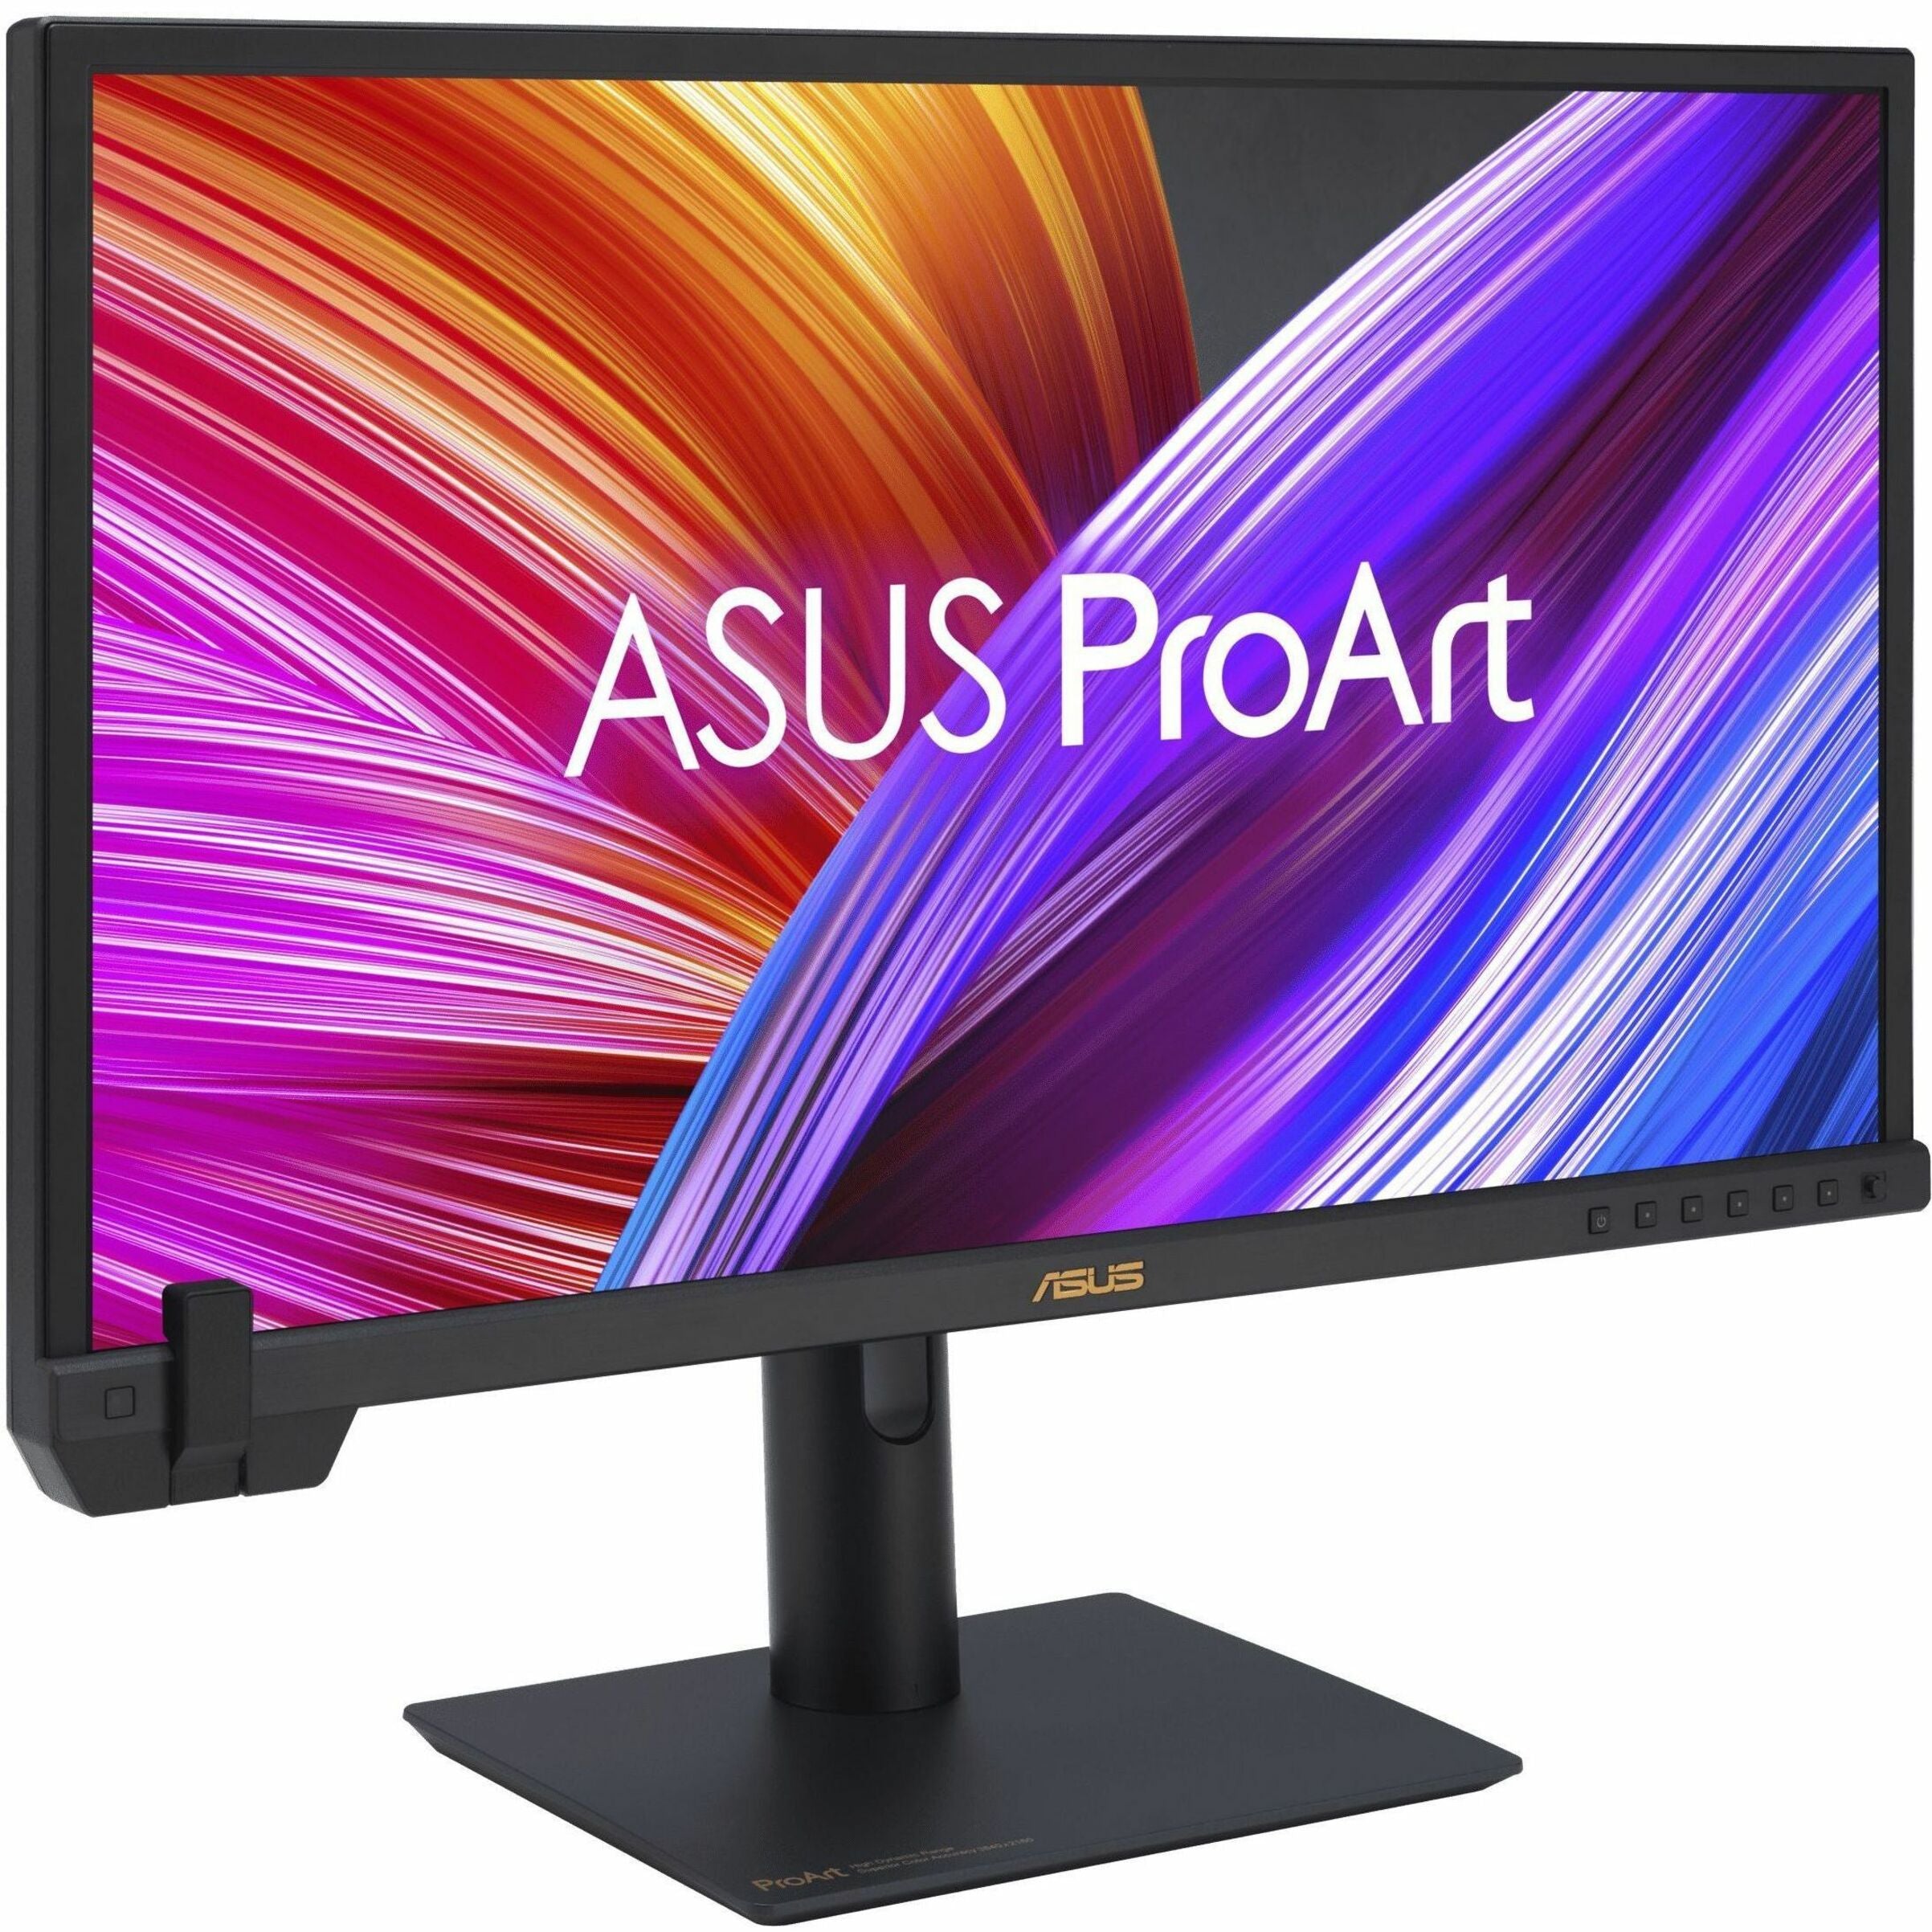 Asus PA24US ProArt Widescreen LED Monitor, 24 4K UHD, HDR, USB-C